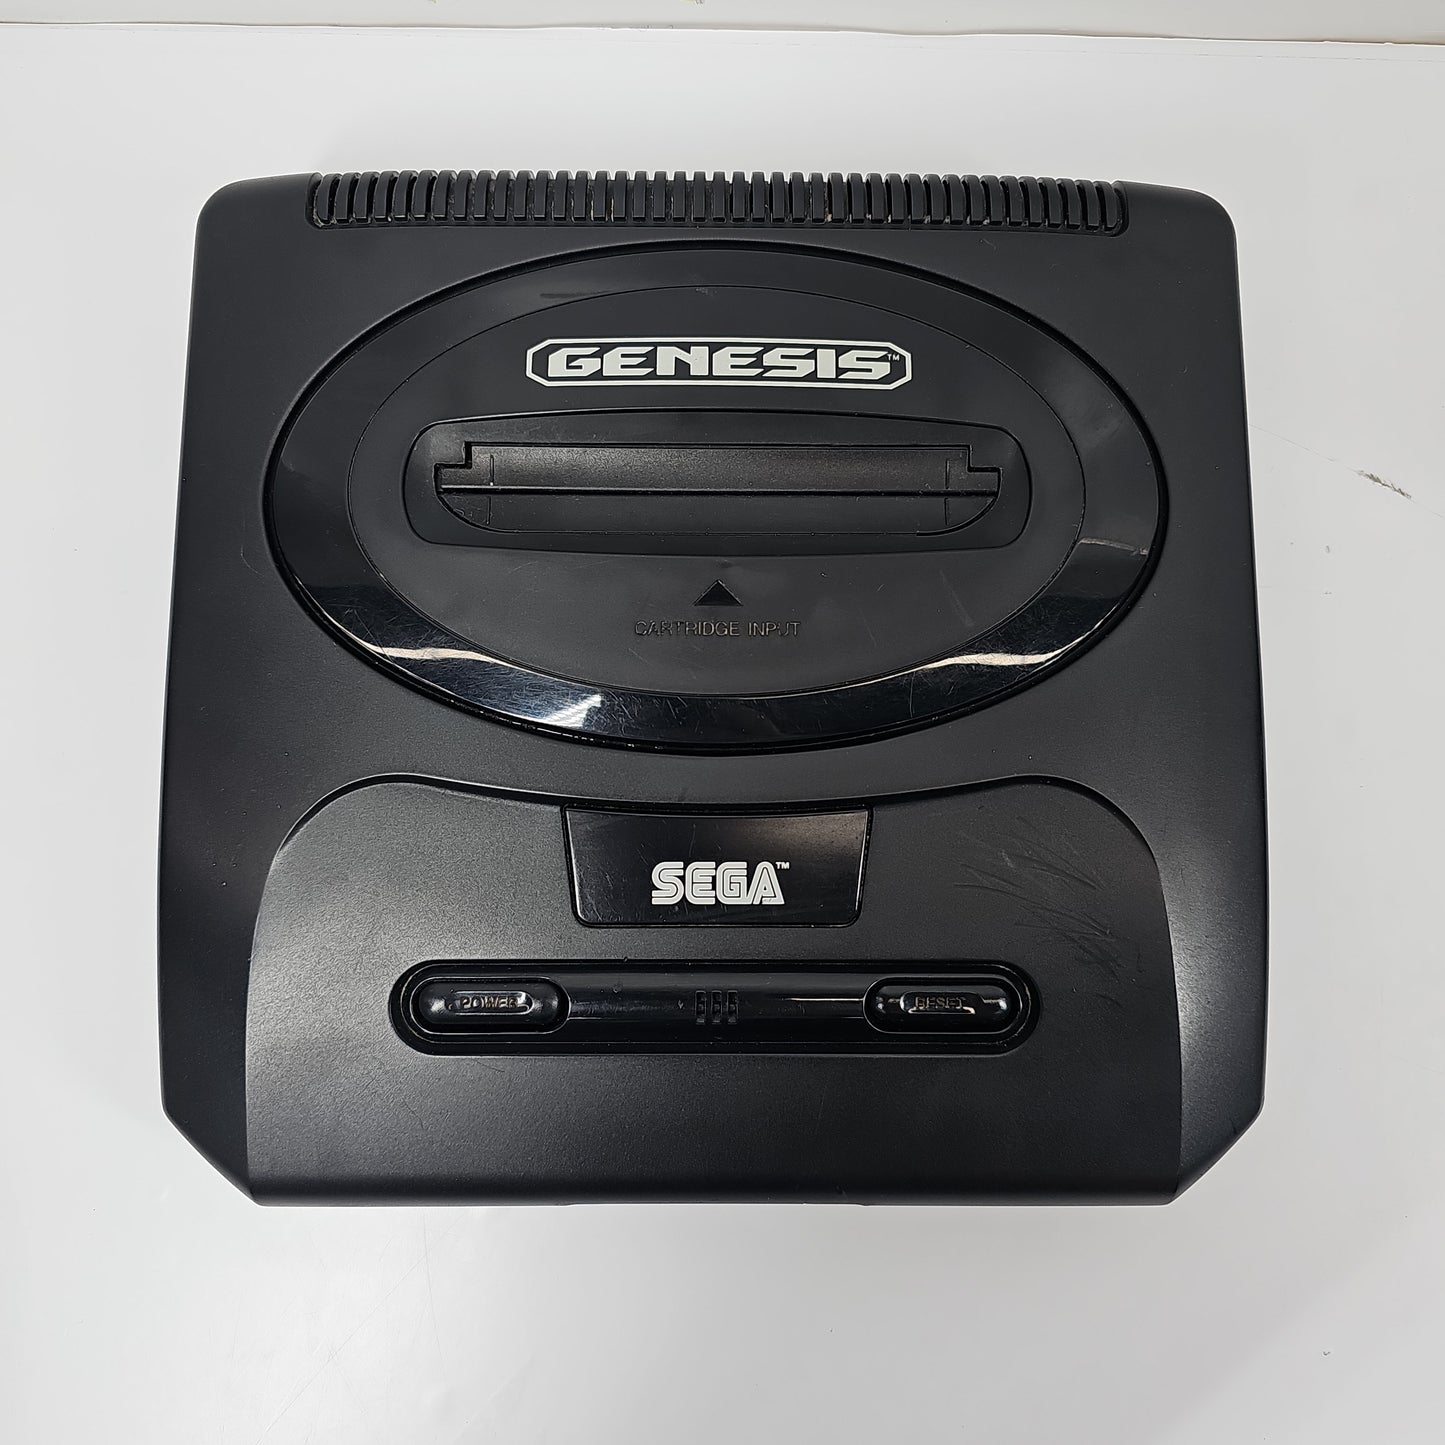 Sega Genesis 2 "Tower of Power" CD 32X Video Game Console Black MK-1361